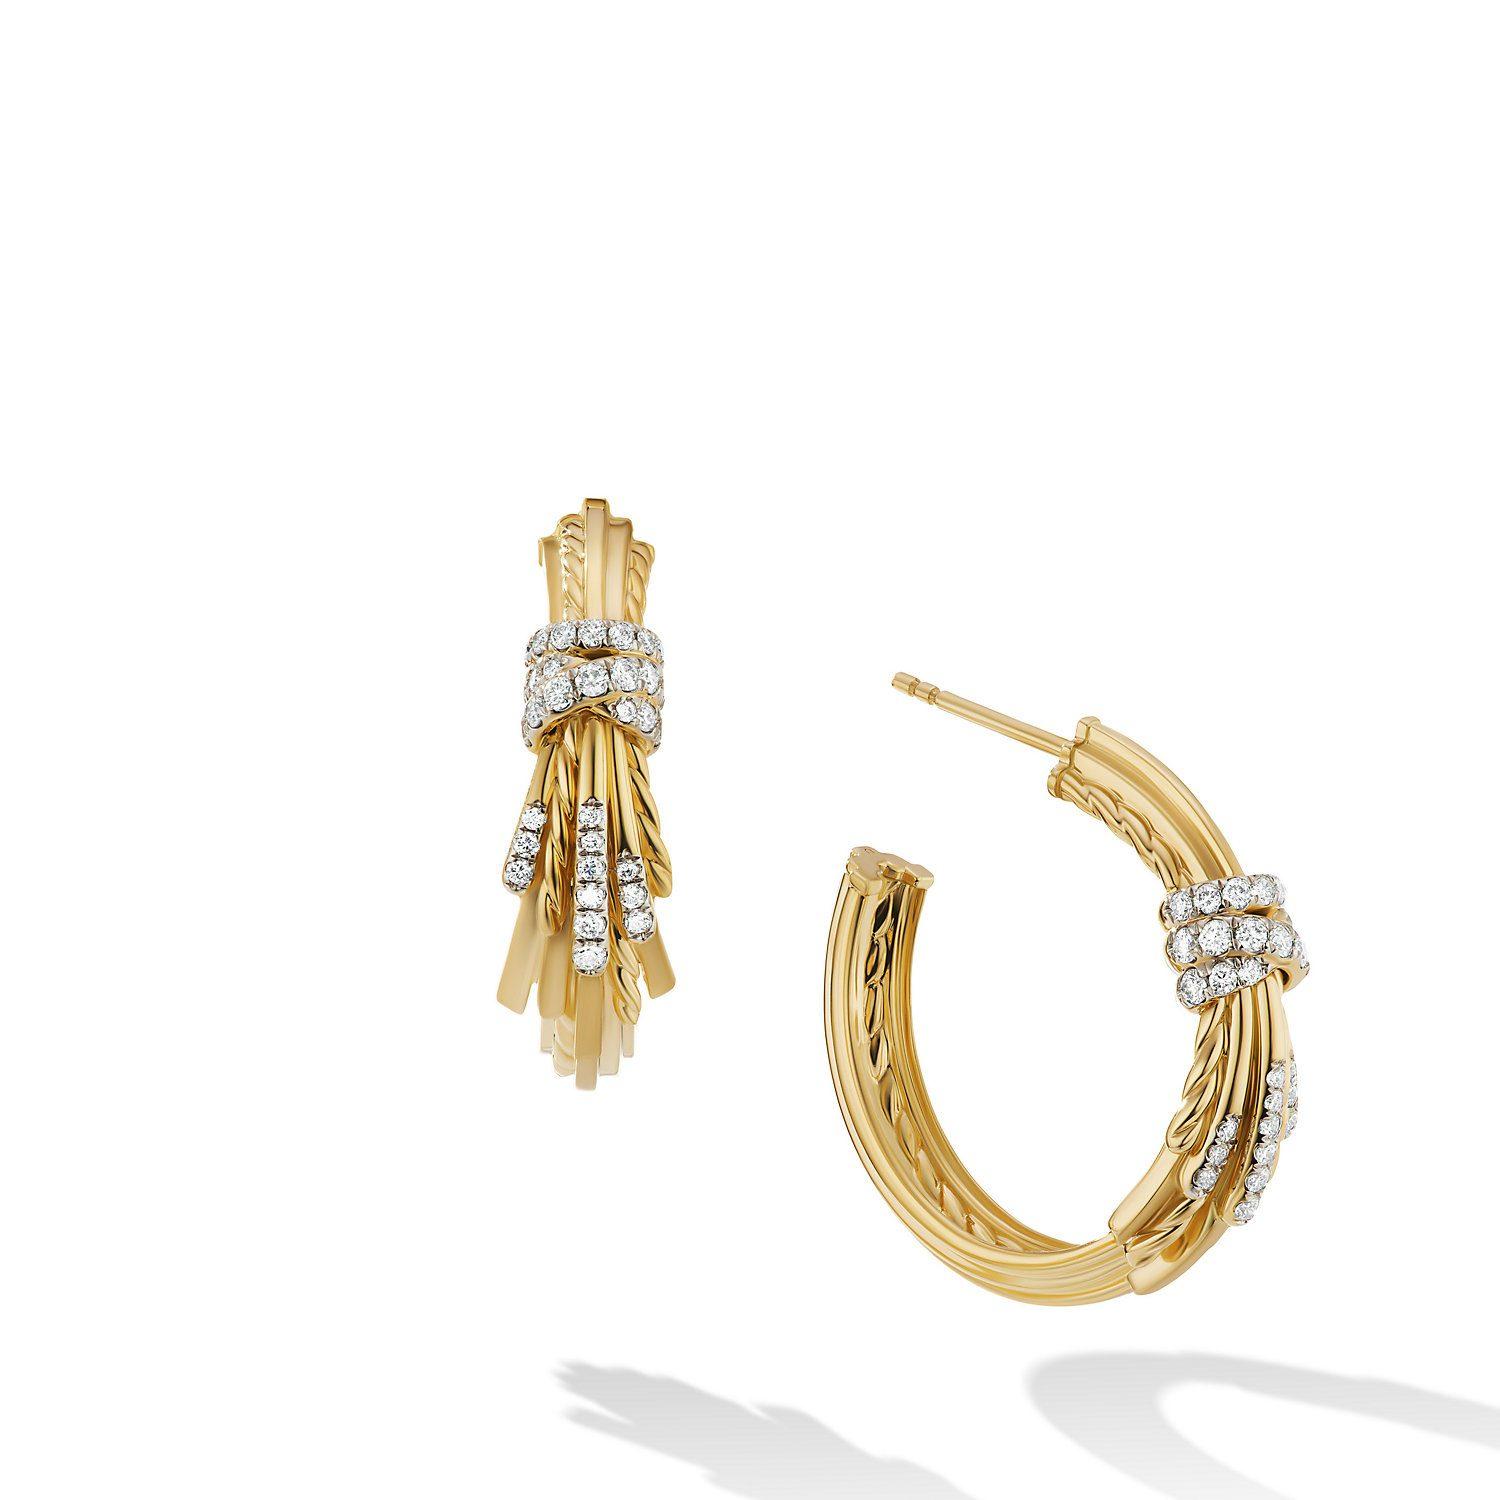 David Yurman Angelika Hoop Earrings in 18k Yellow Gold with Pave Diamonds